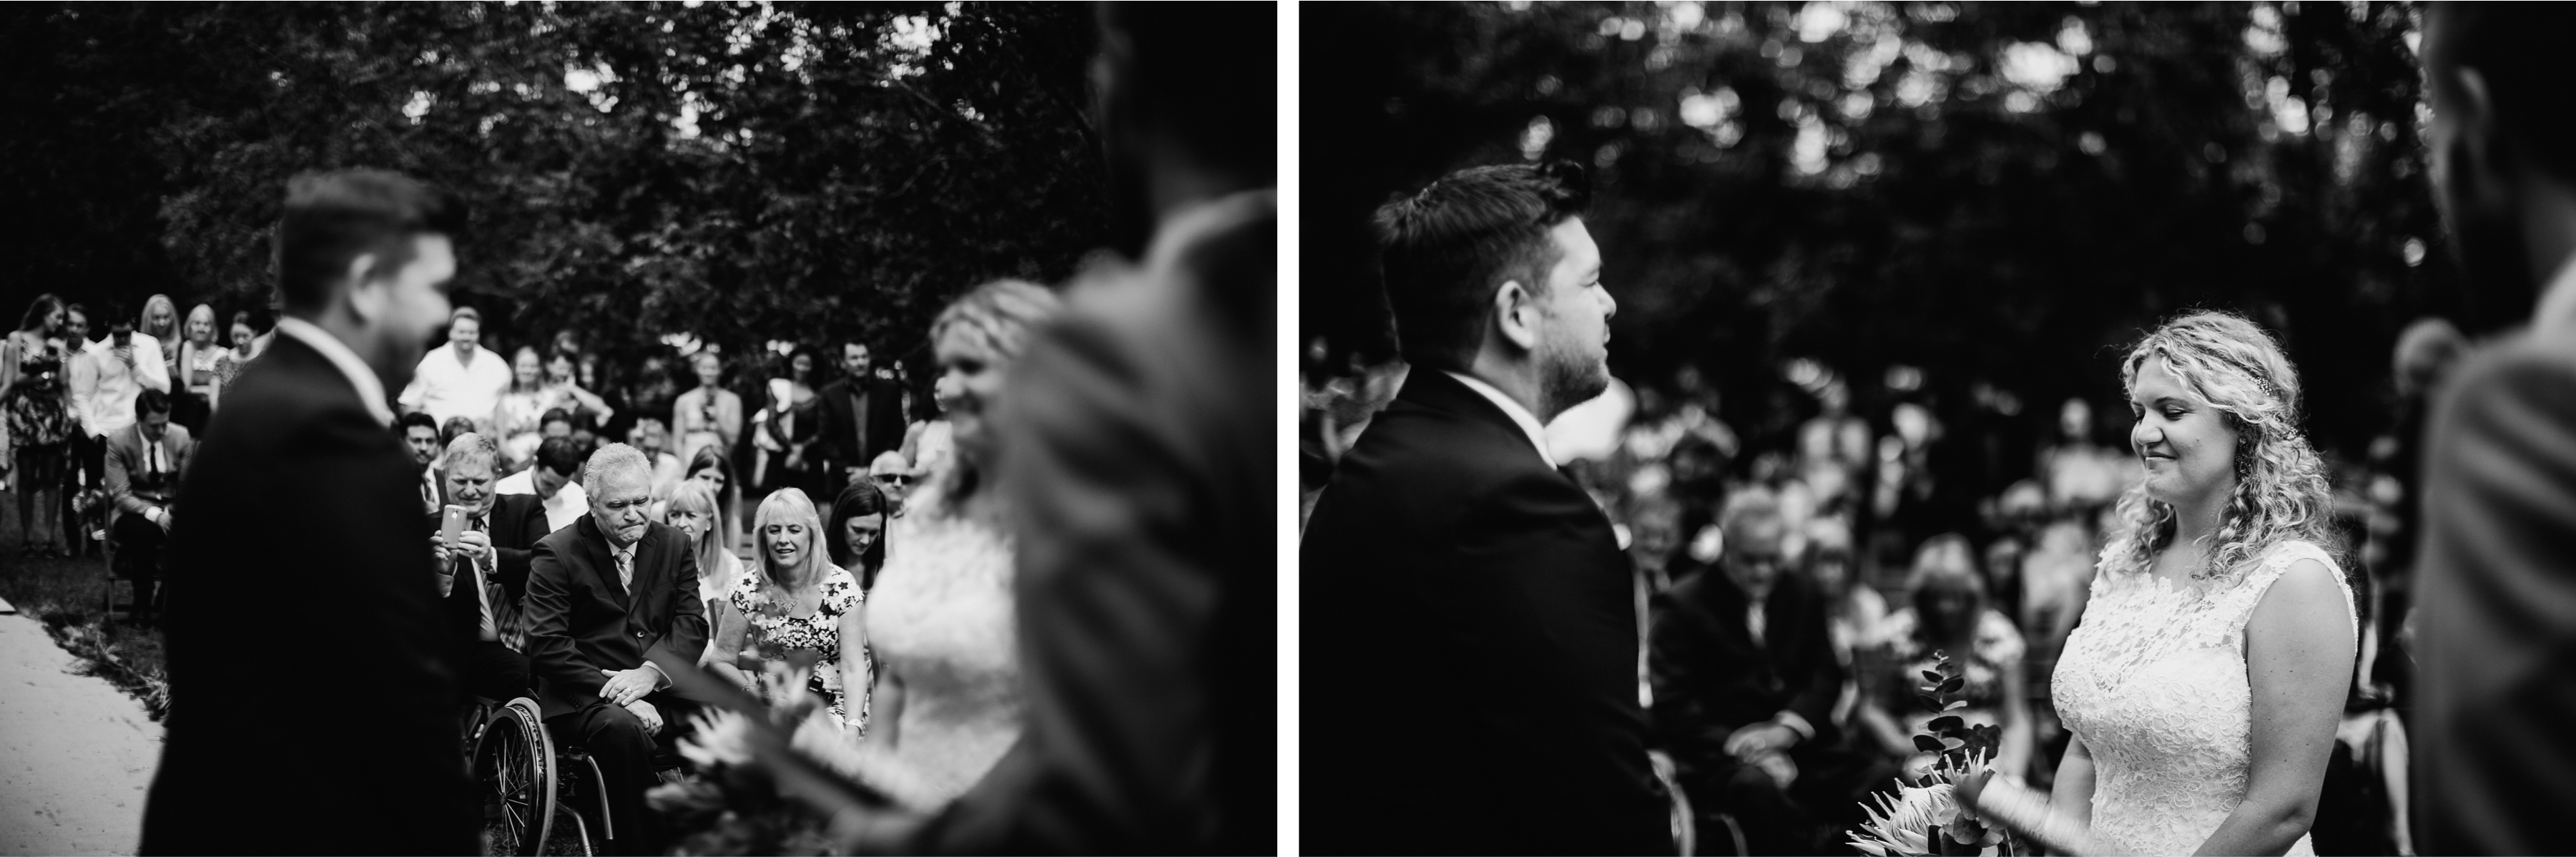 Annaliese & Santi Wedding- Collage8